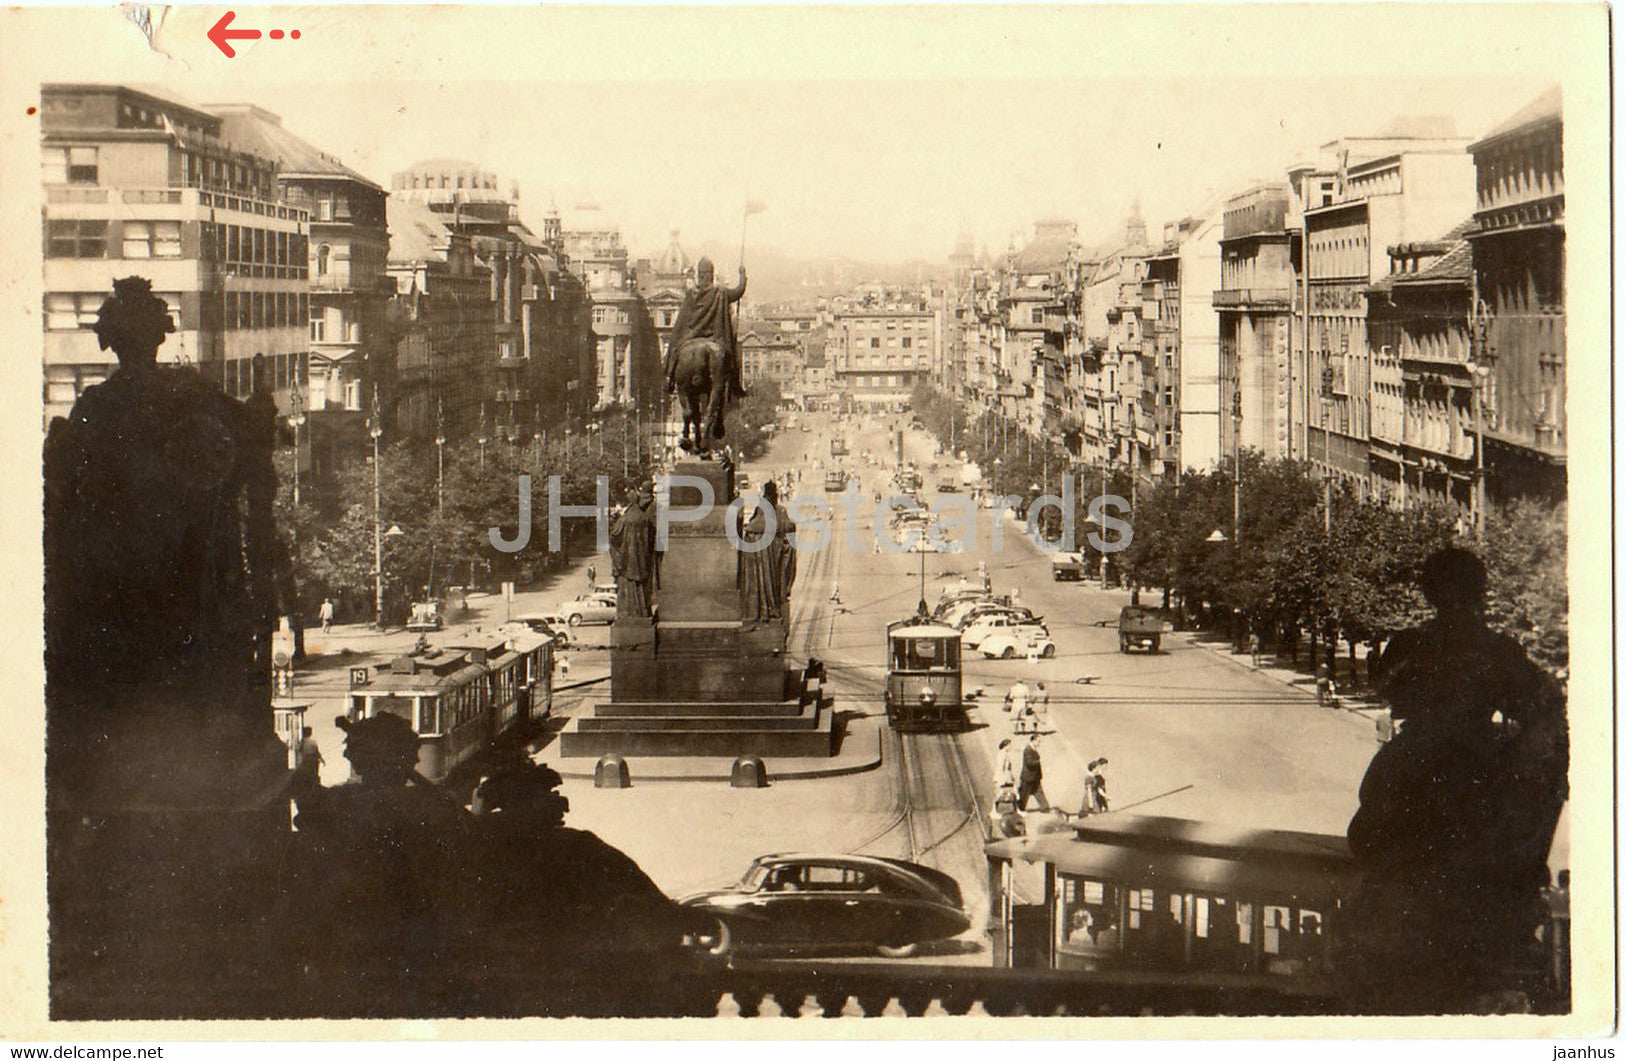 Praha - Prague - Vaclavske namesti - tram - 718 - old postcard - 1957 - Czech Republic - used - JH Postcards